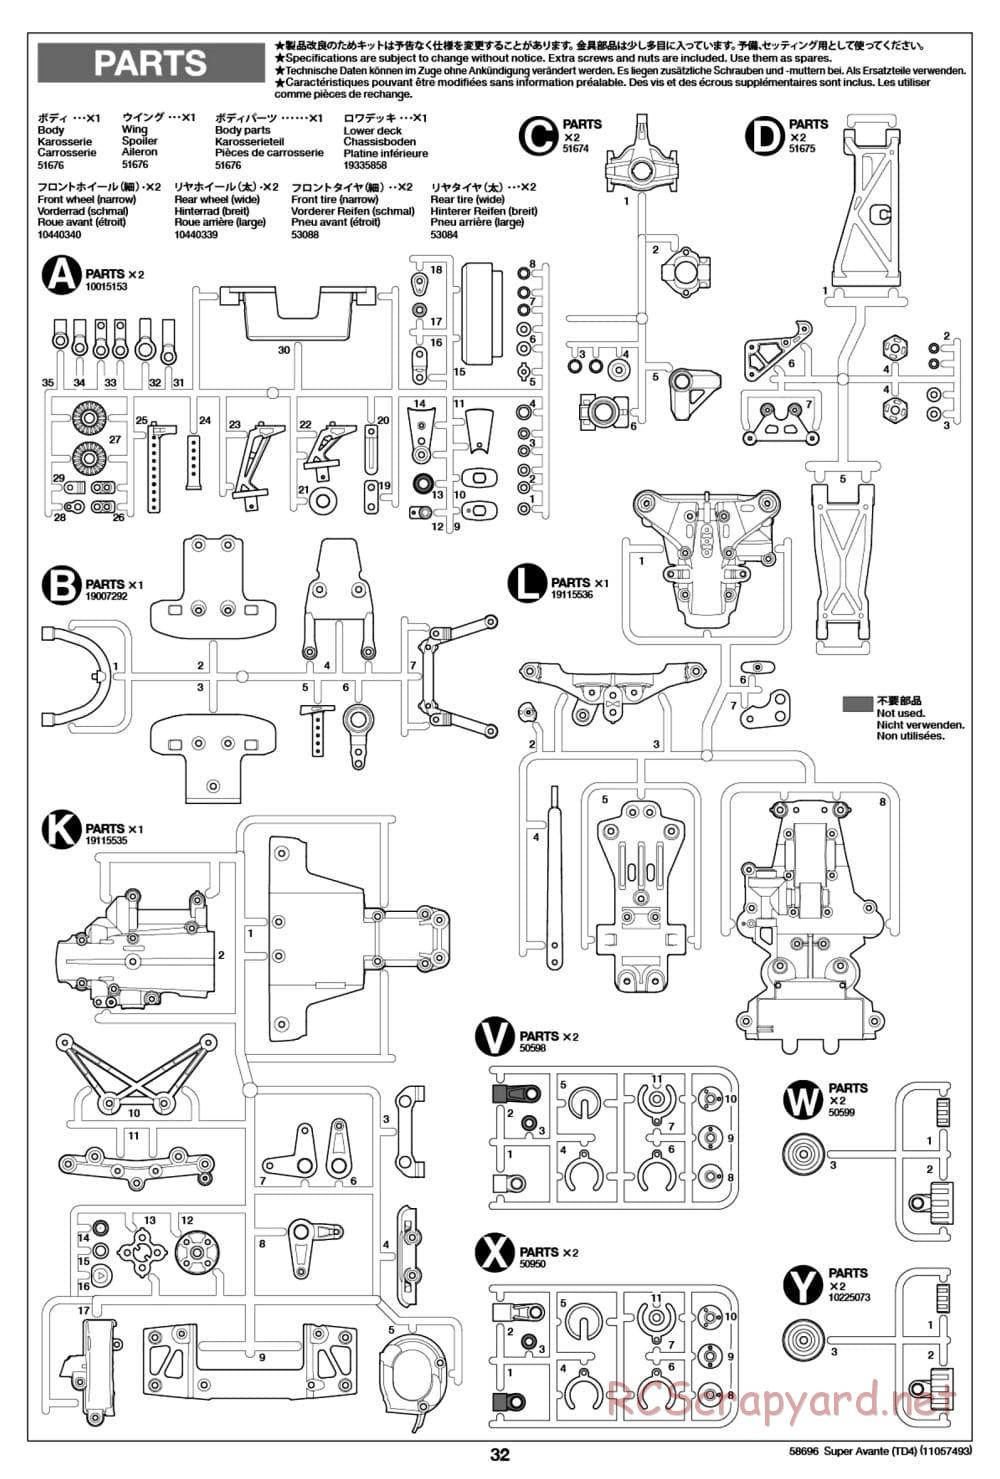 Tamiya - Super Avante - TD4 Chassis - Manual - Page 33